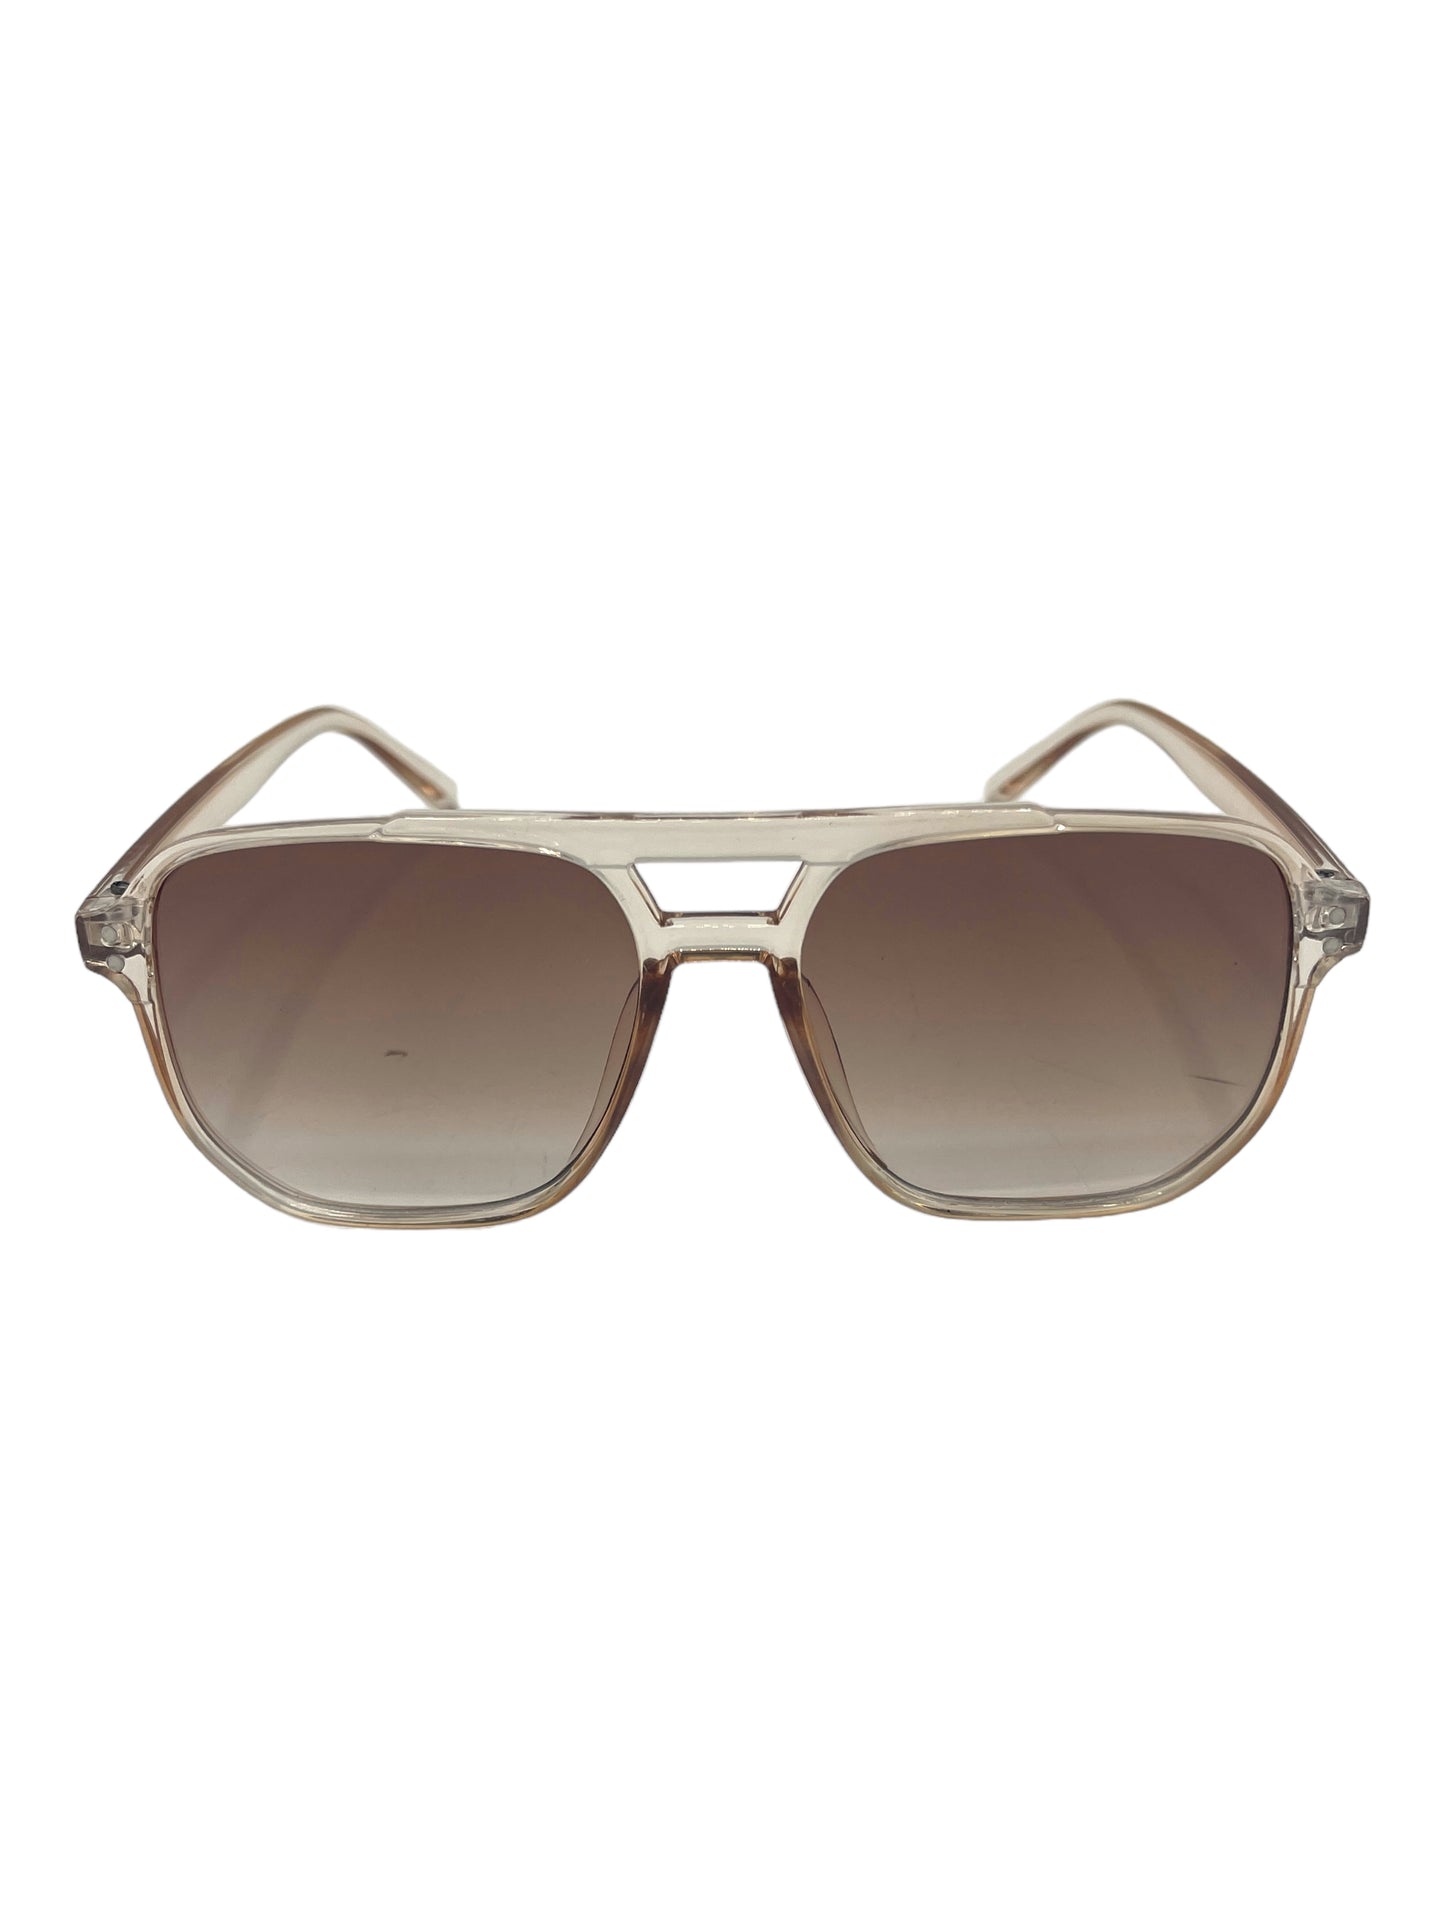 Oversized Frame Aviator Style Everyday Sunglasses